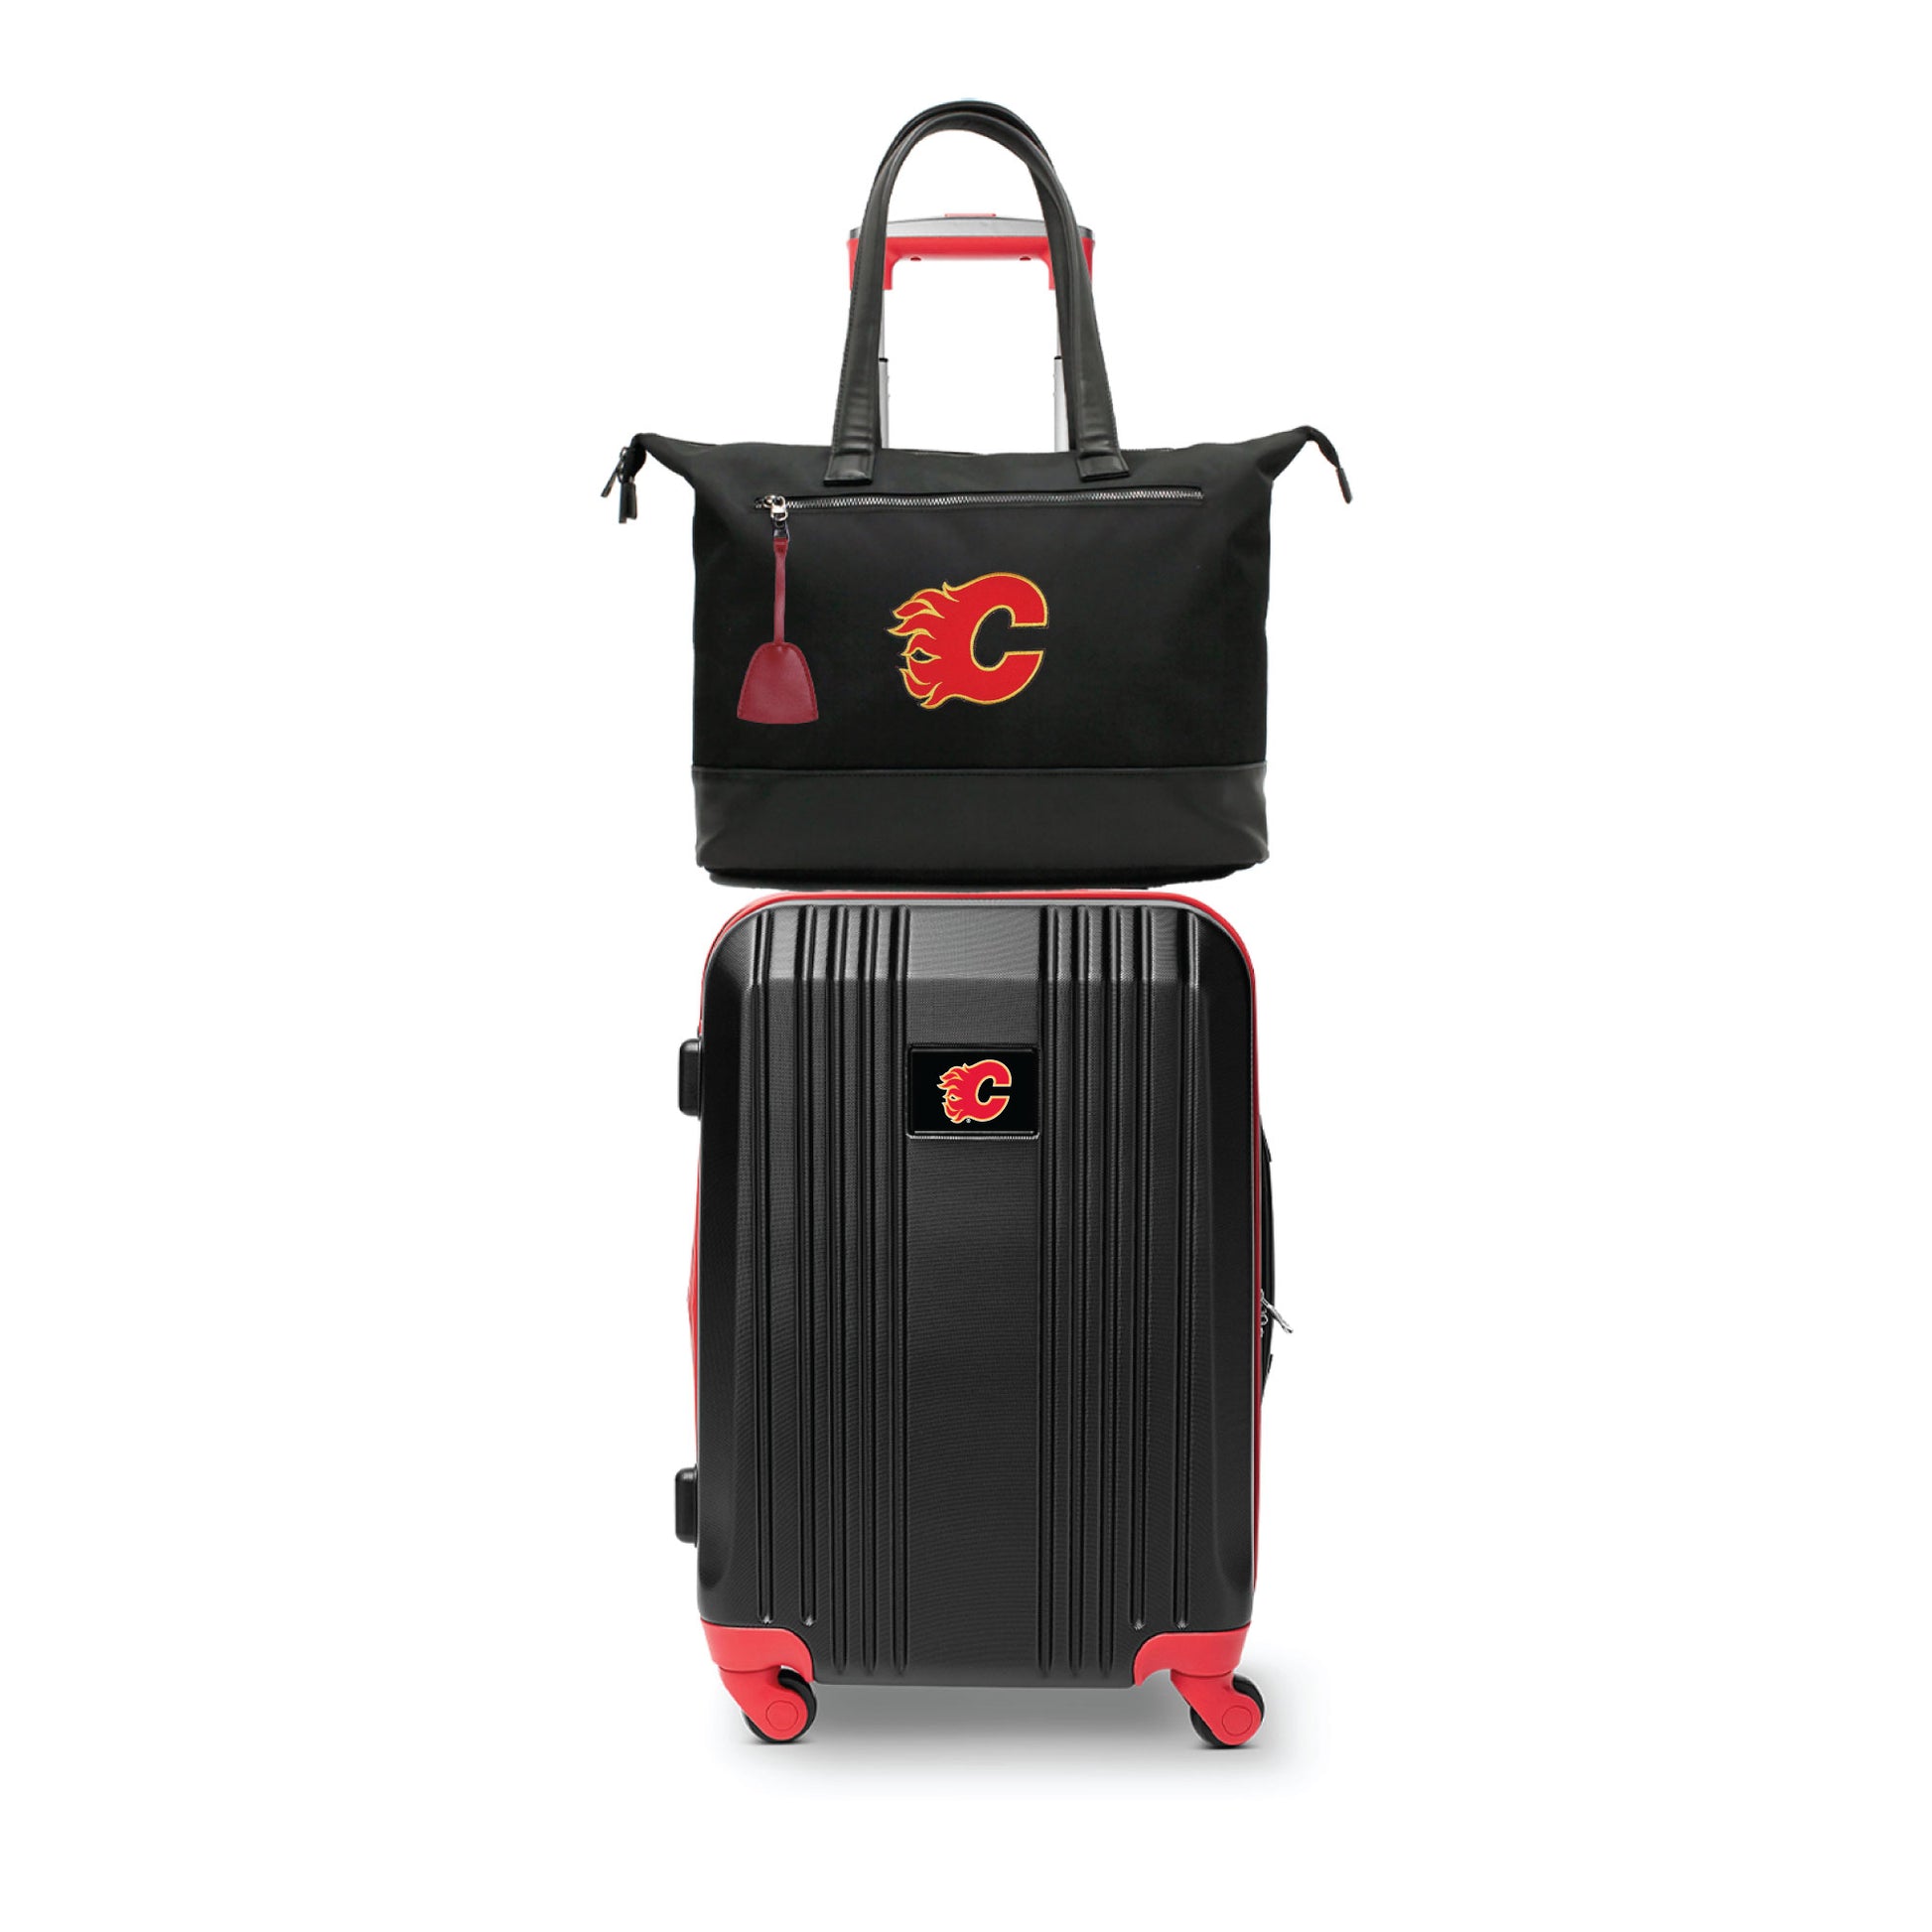 Calgary Flames Premium Laptop Tote Bag and Luggage Set